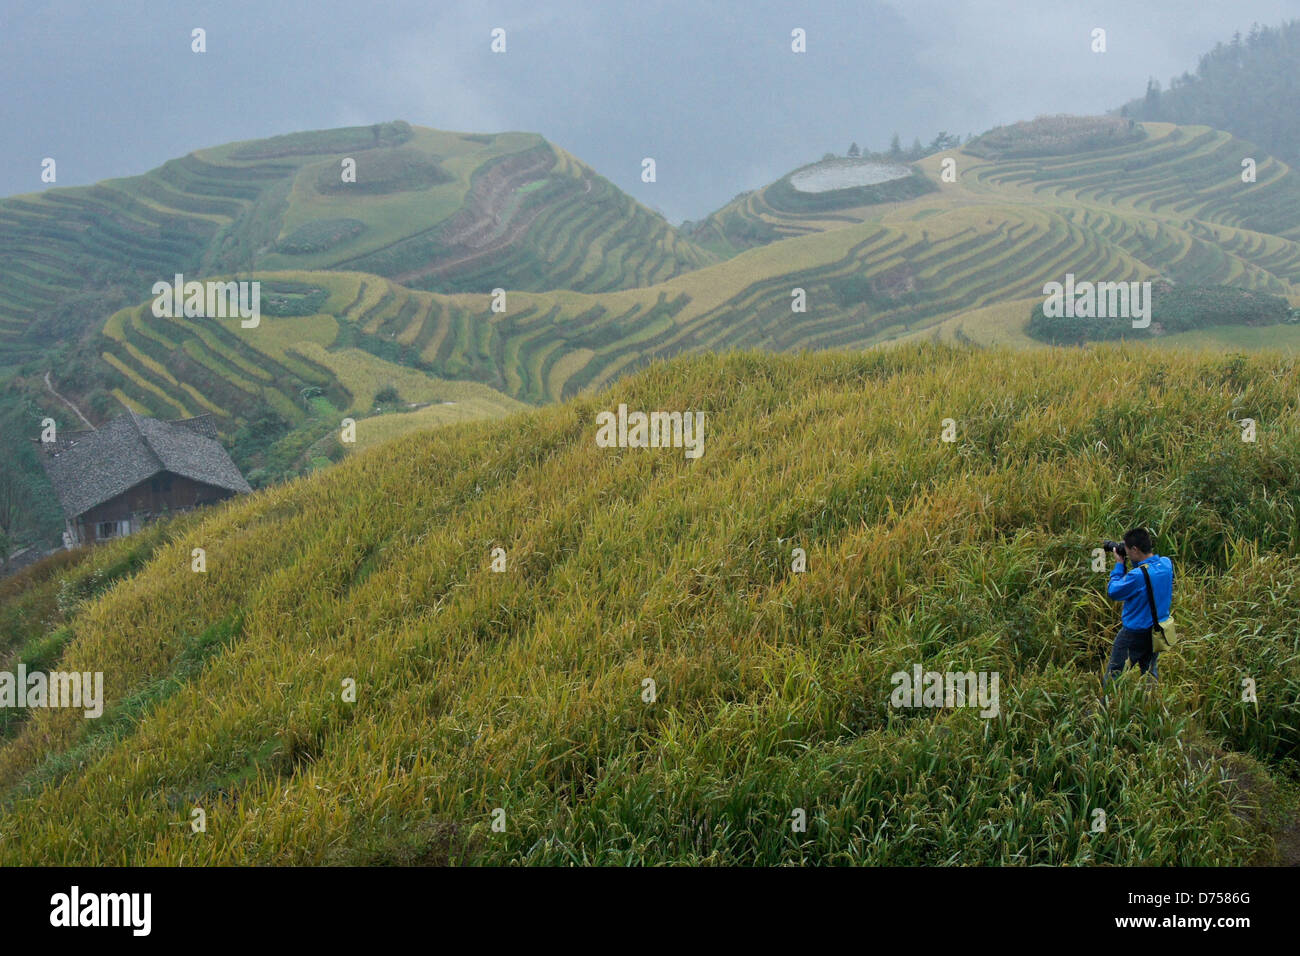 Reisterrassen von Longsheng, Guangxi, China Stockfoto